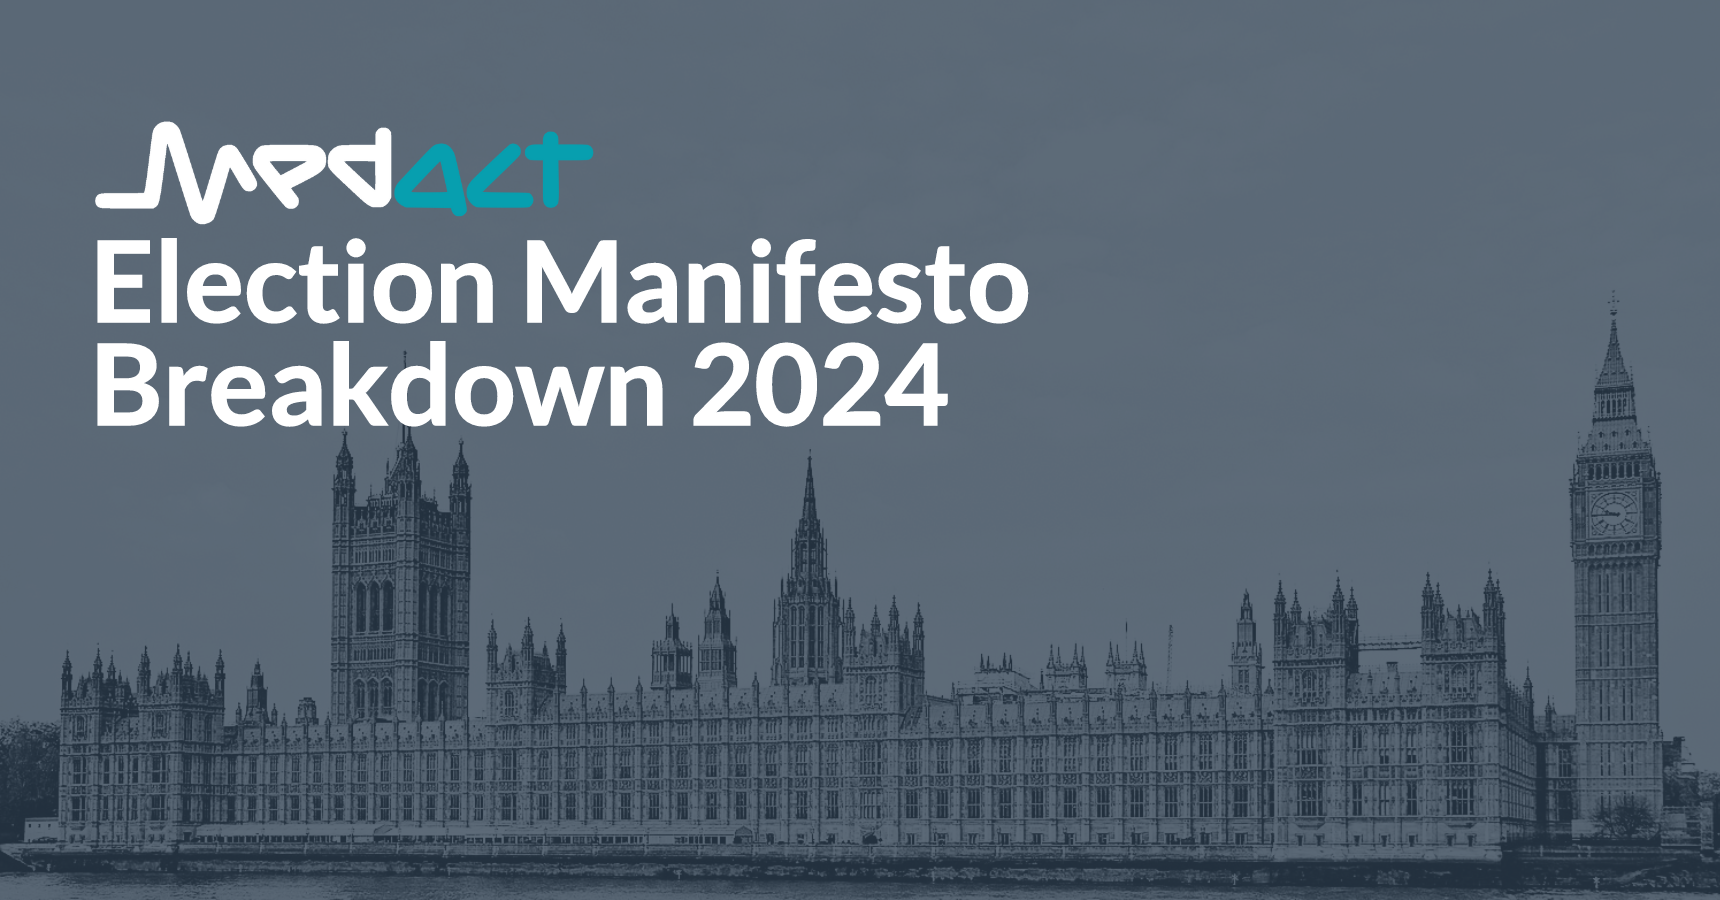 Medact’s Election Manifesto Breakdown 2024